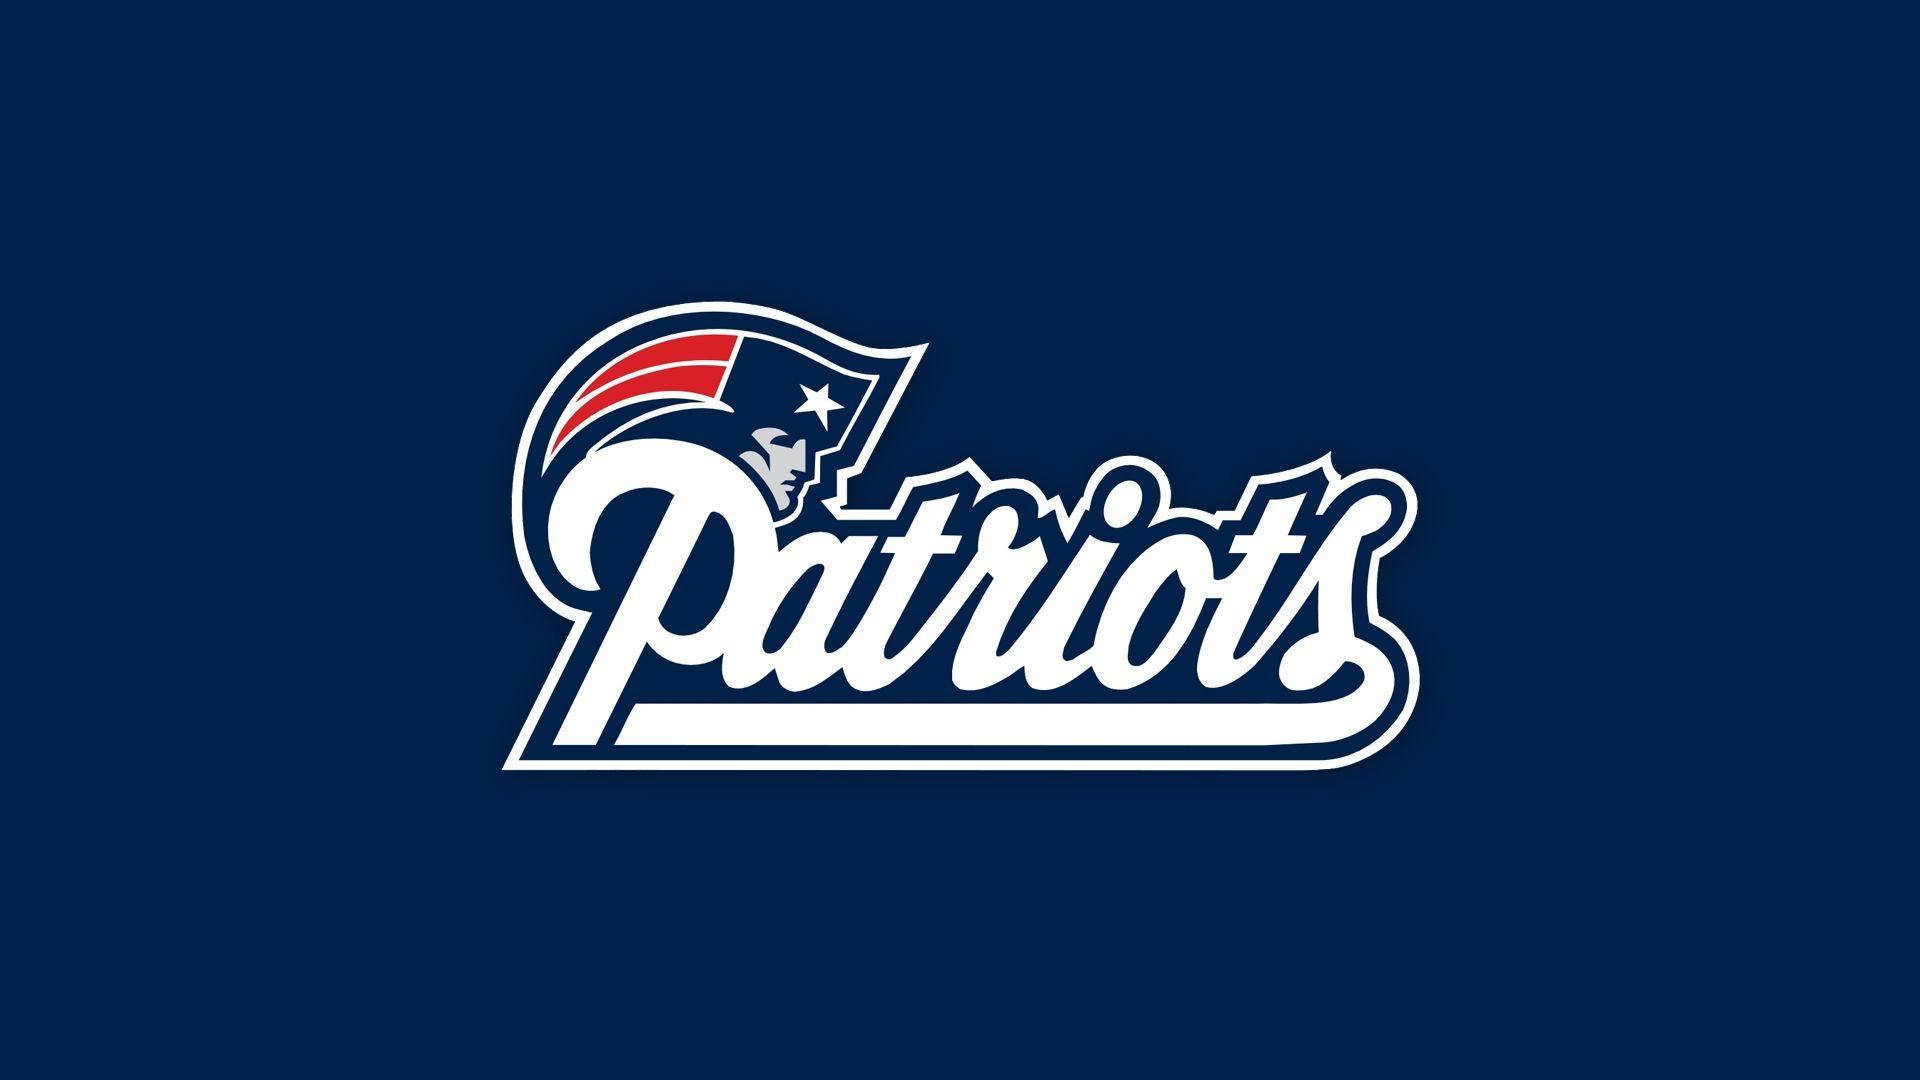 New England Patriots Nfl Team Logo Background